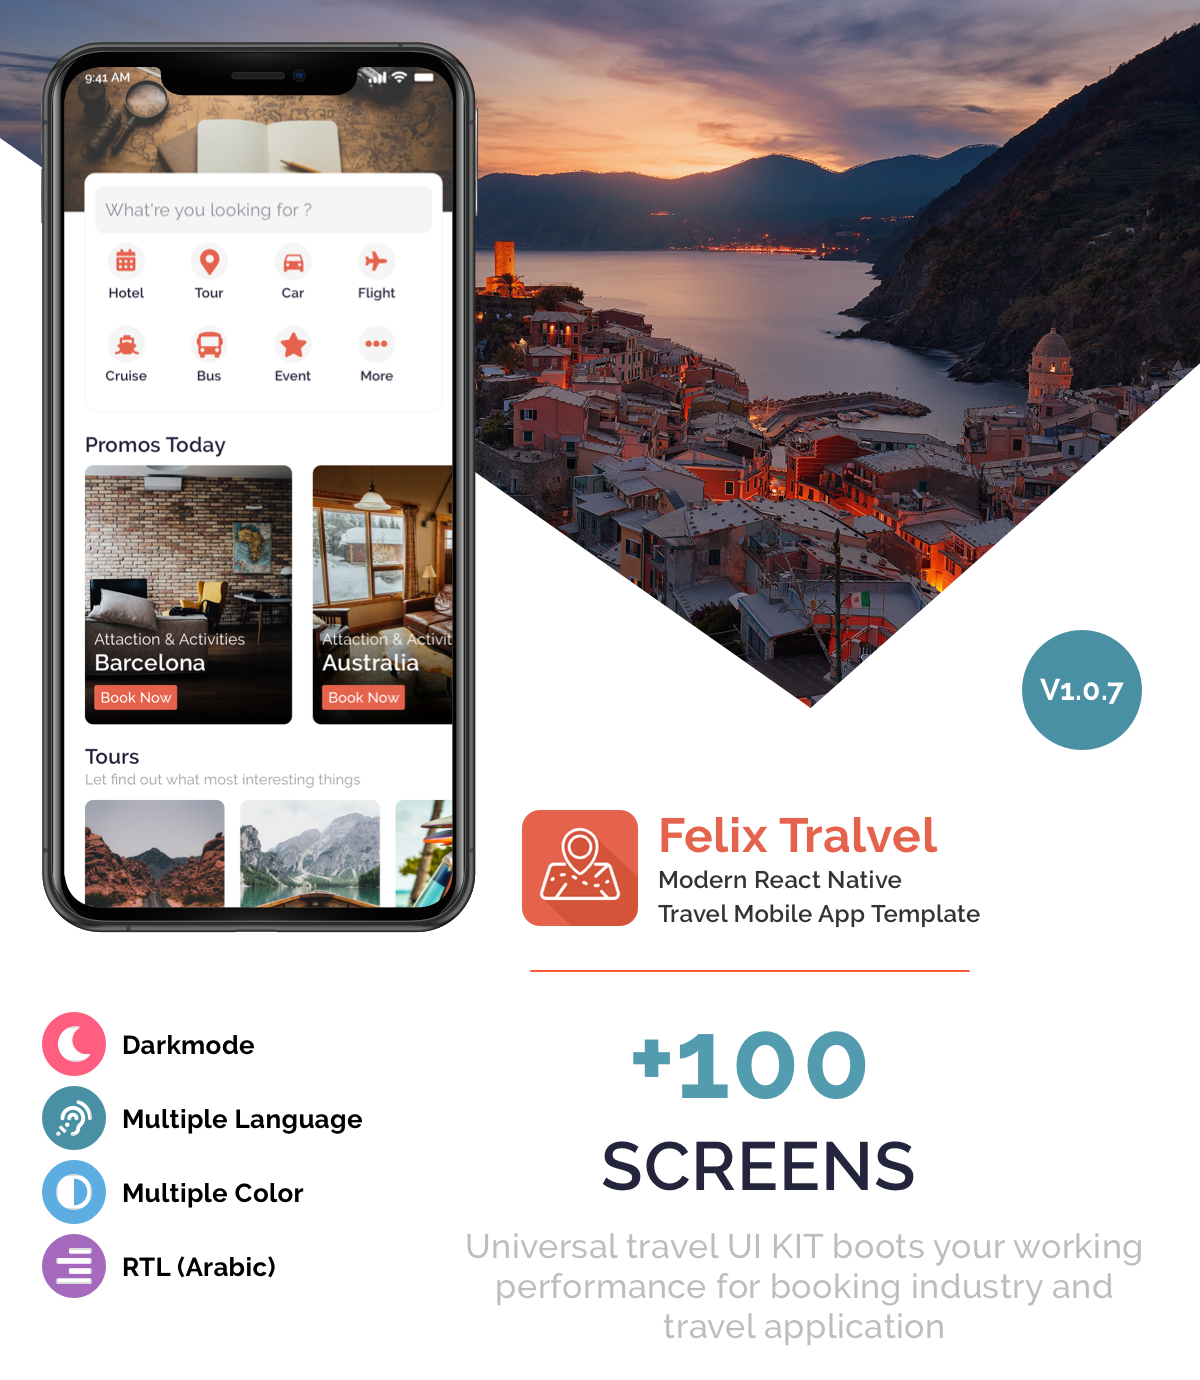 Felix Travel - mobile React Native travel app template - 1